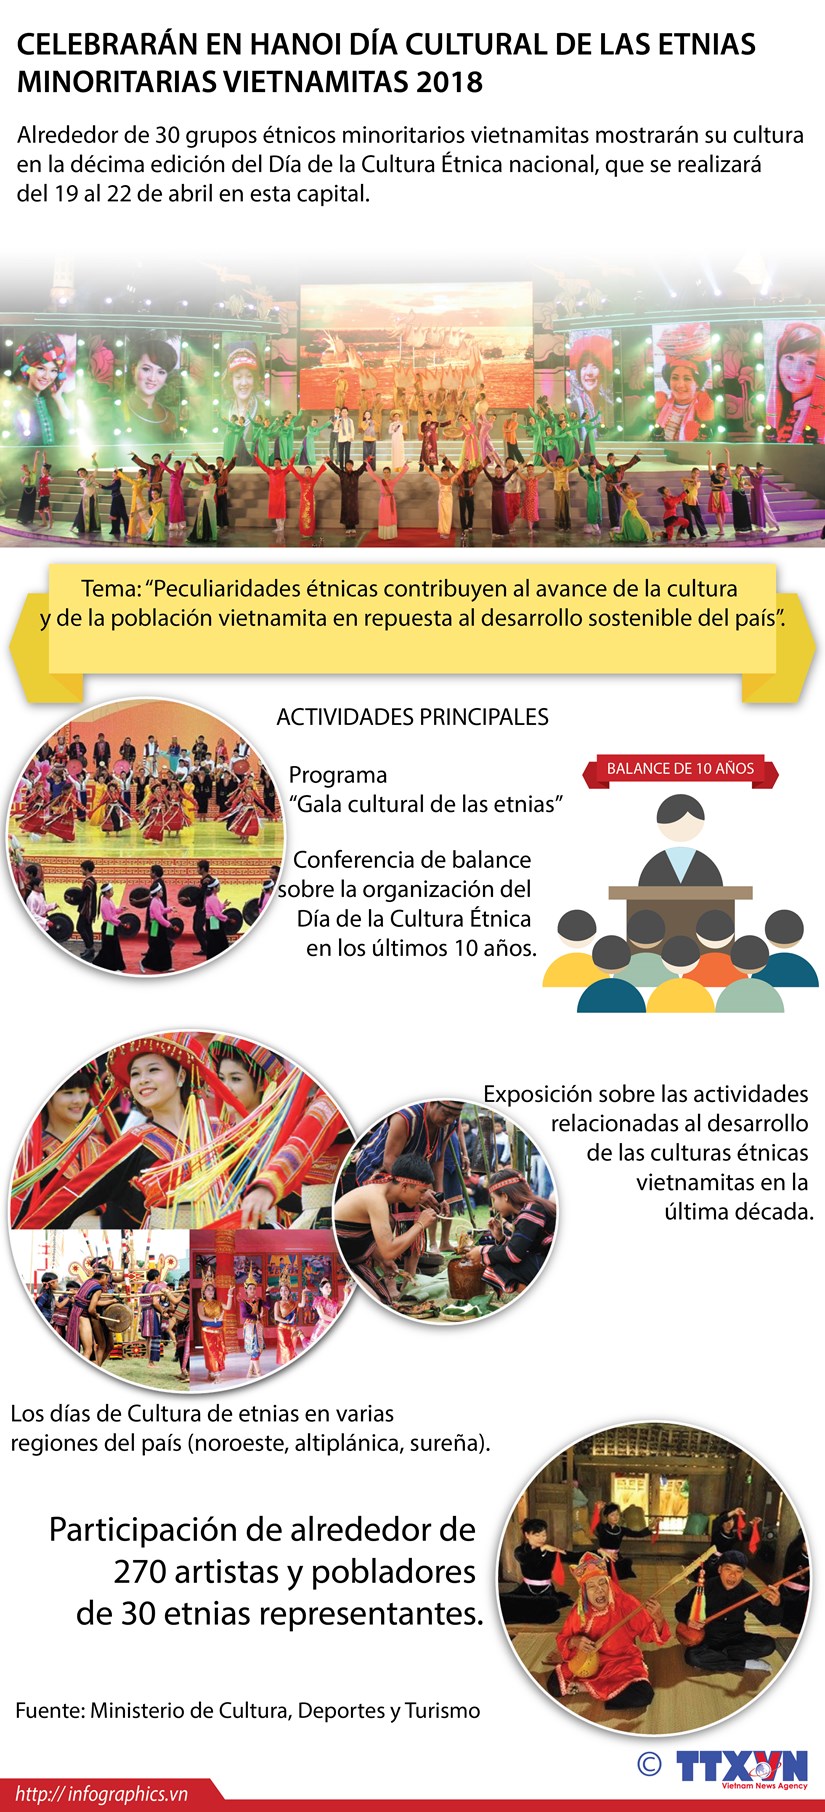 [Infografia] Celebraran en Hanoi Dia Cultural de las etnias minoritarias vietnamitas 2018 hinh anh 1